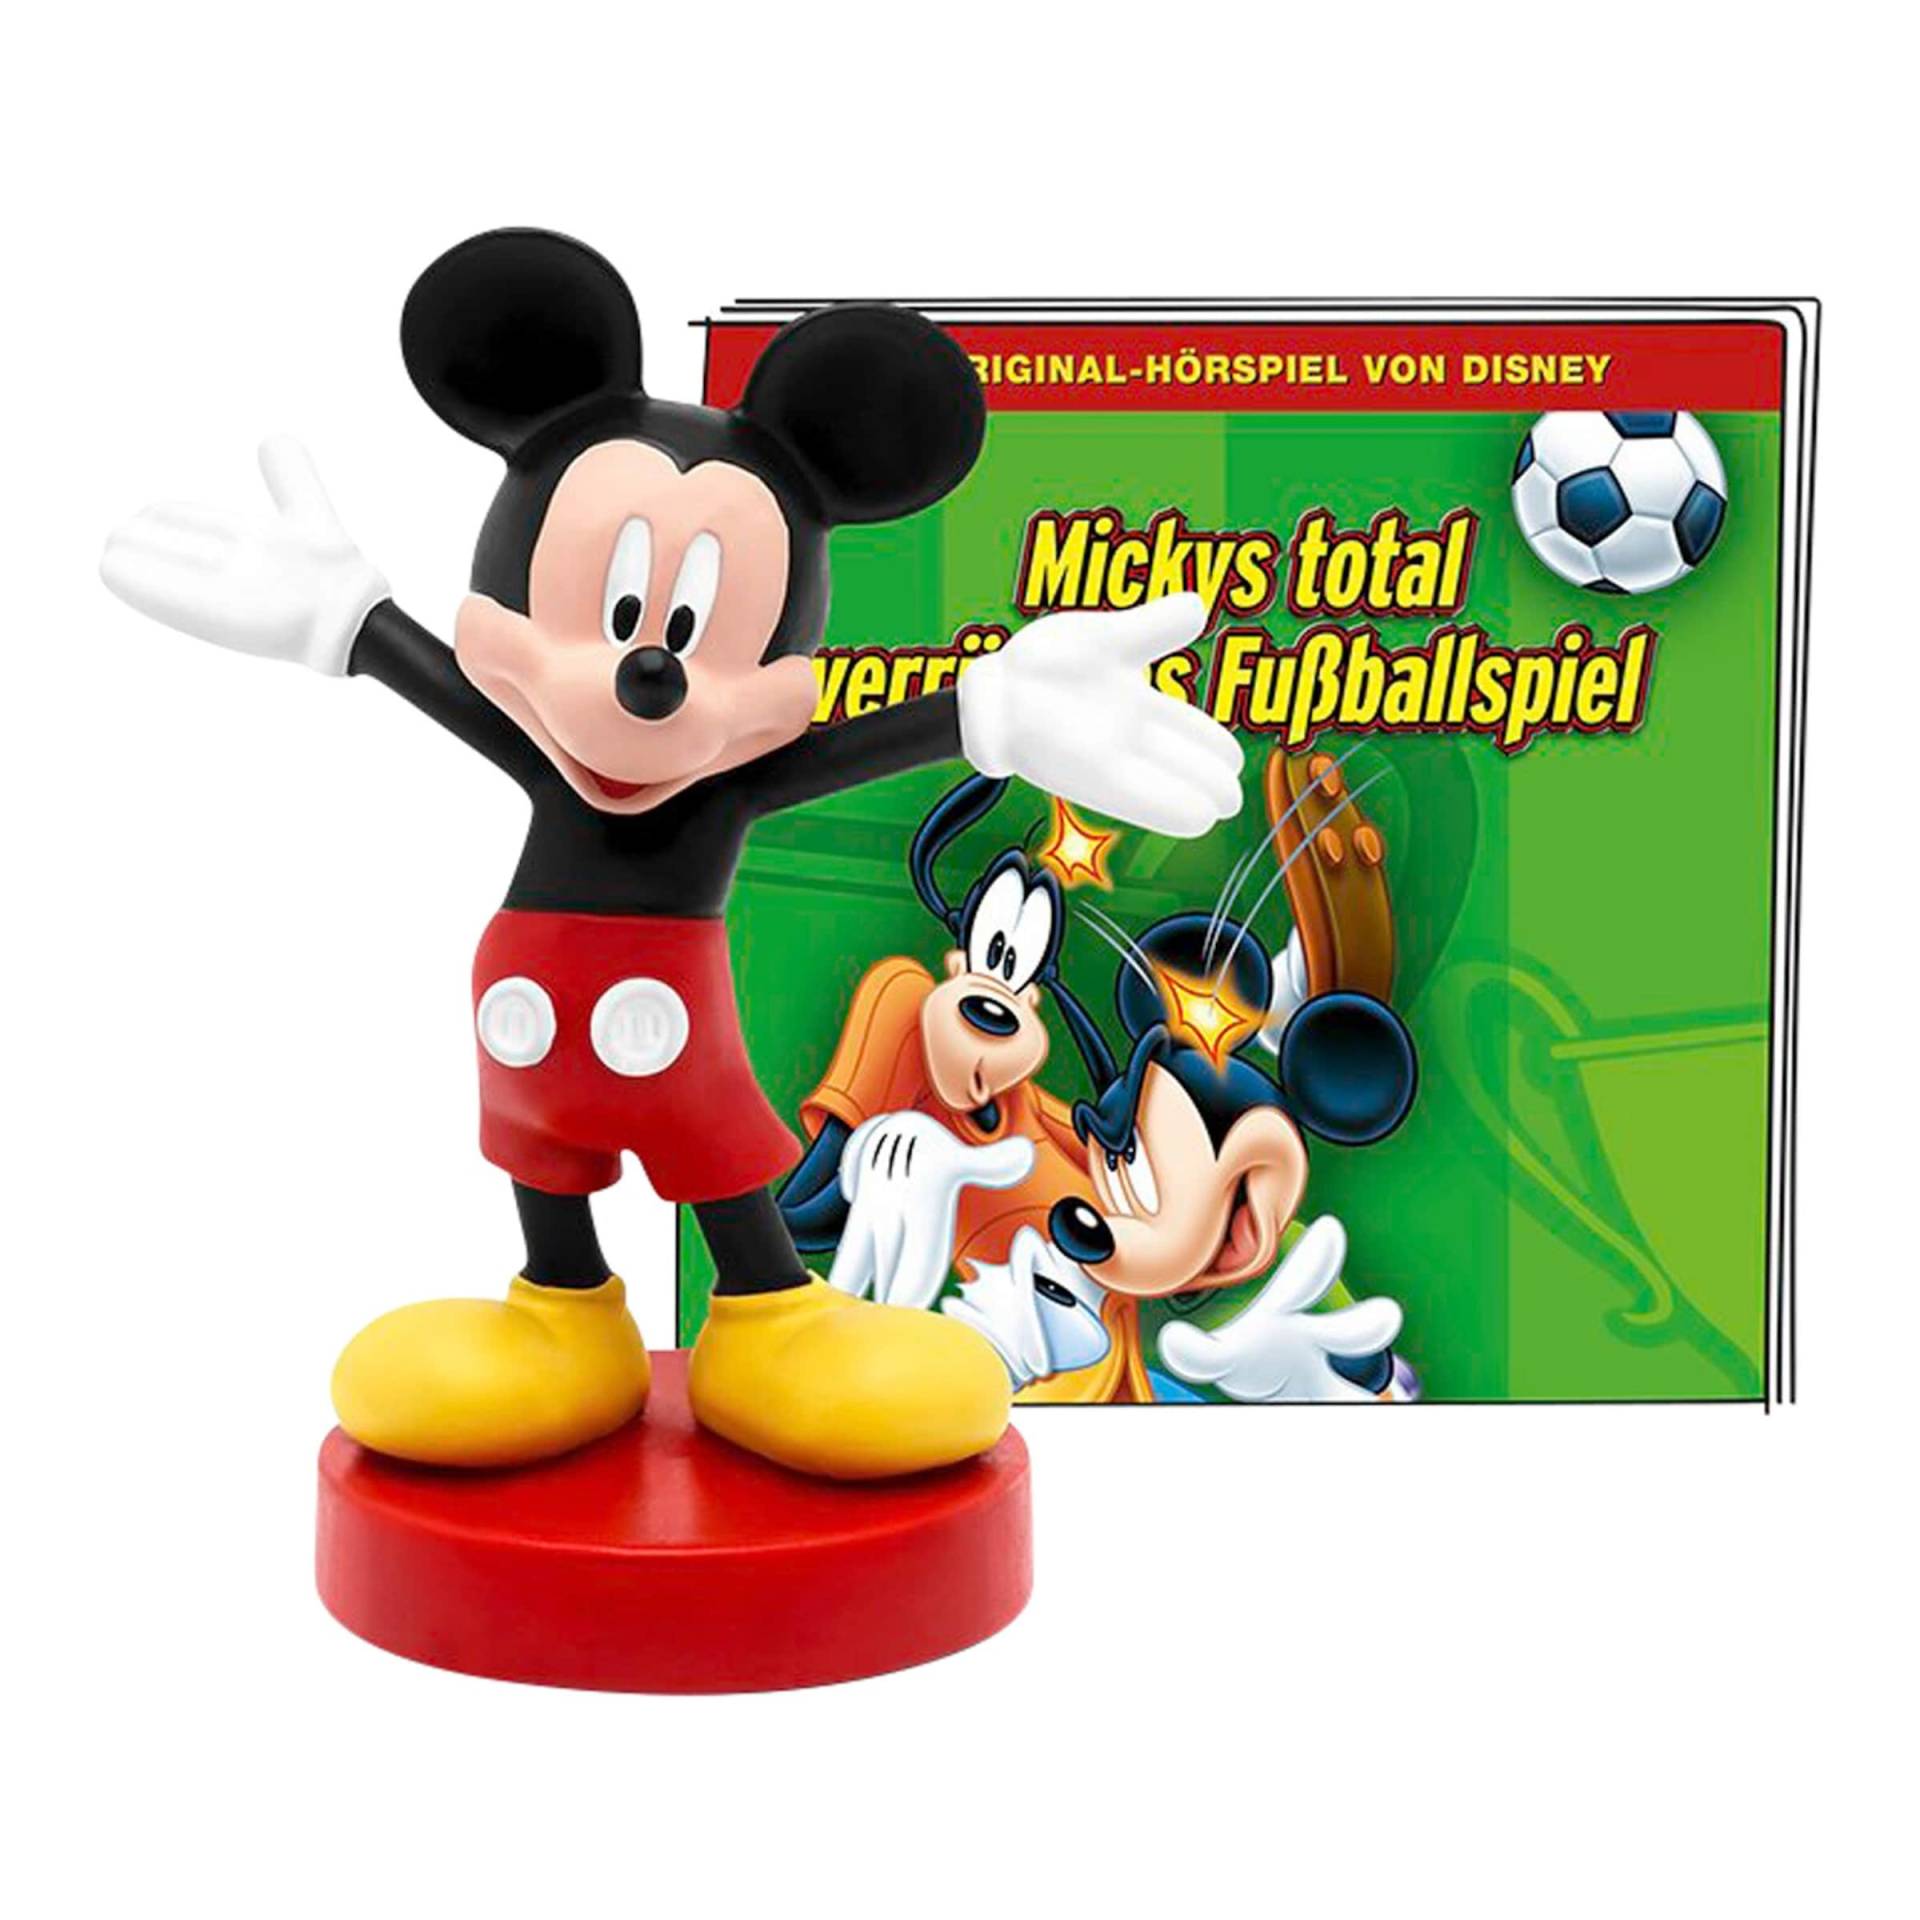 Tonies Tonie Hörfigur Disney - Mickys total verrücktes Fußballspiel von tonies